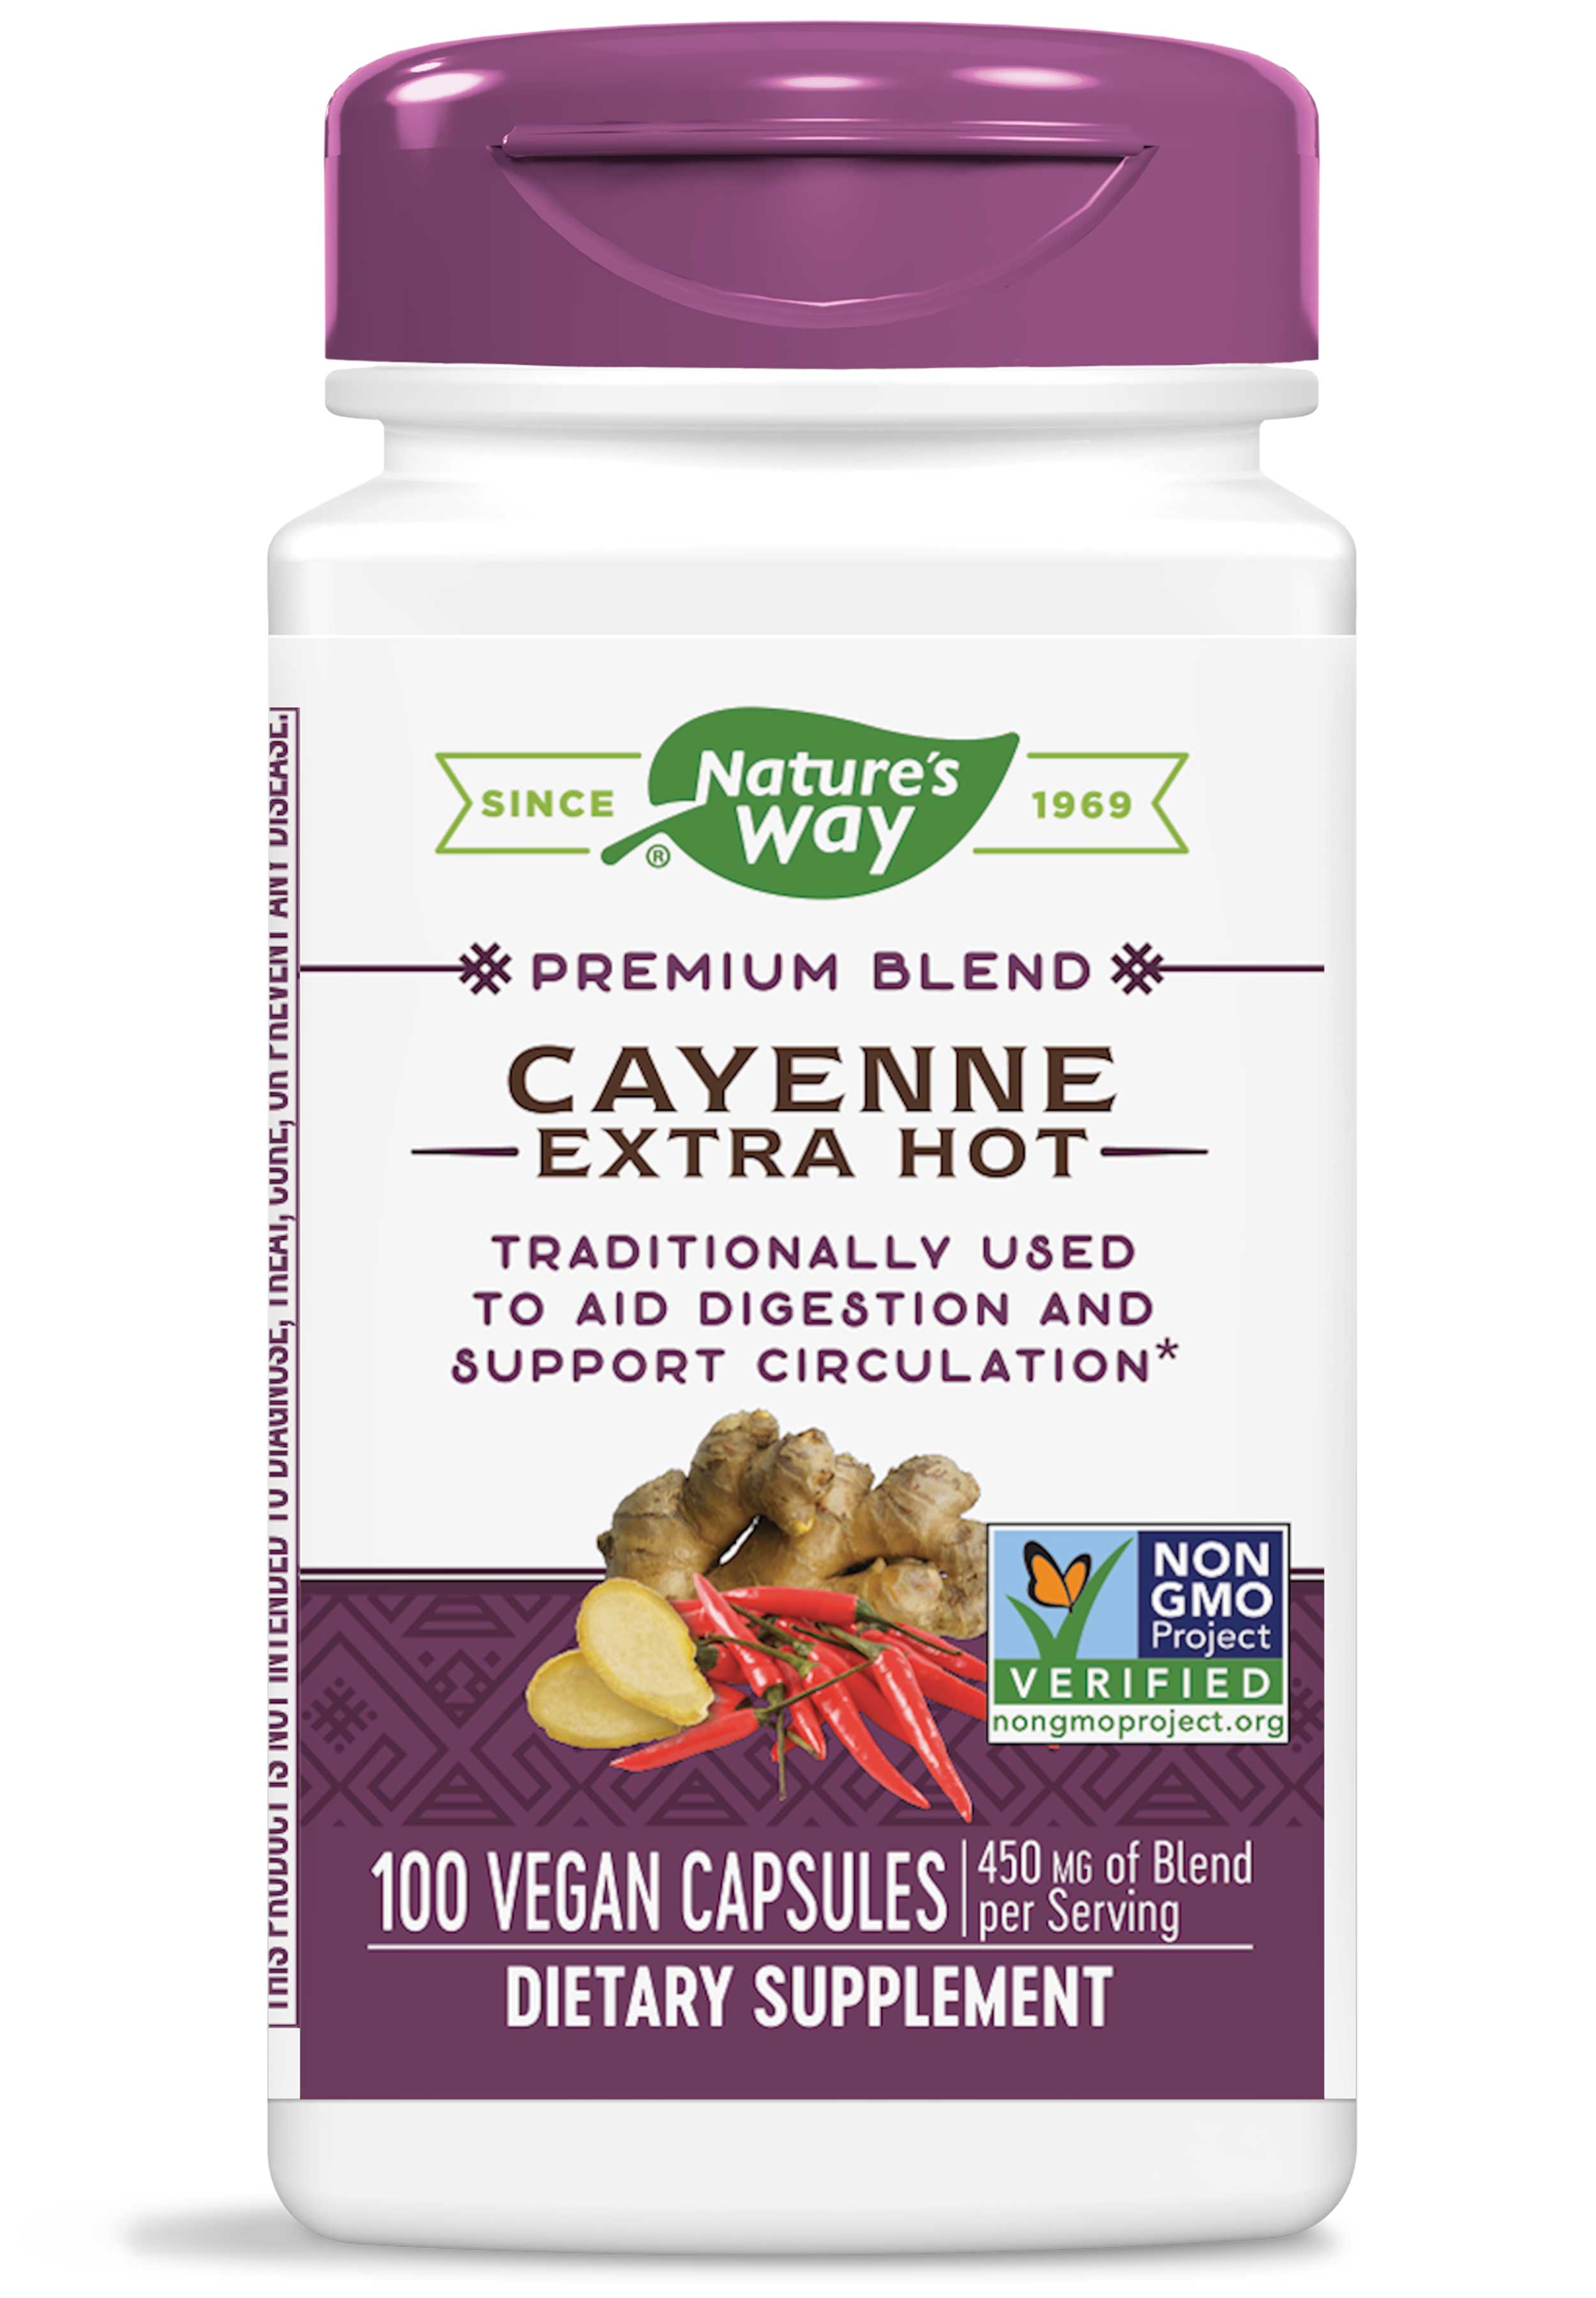 Nature's Way Cayenne Extra Hot Premium Blend